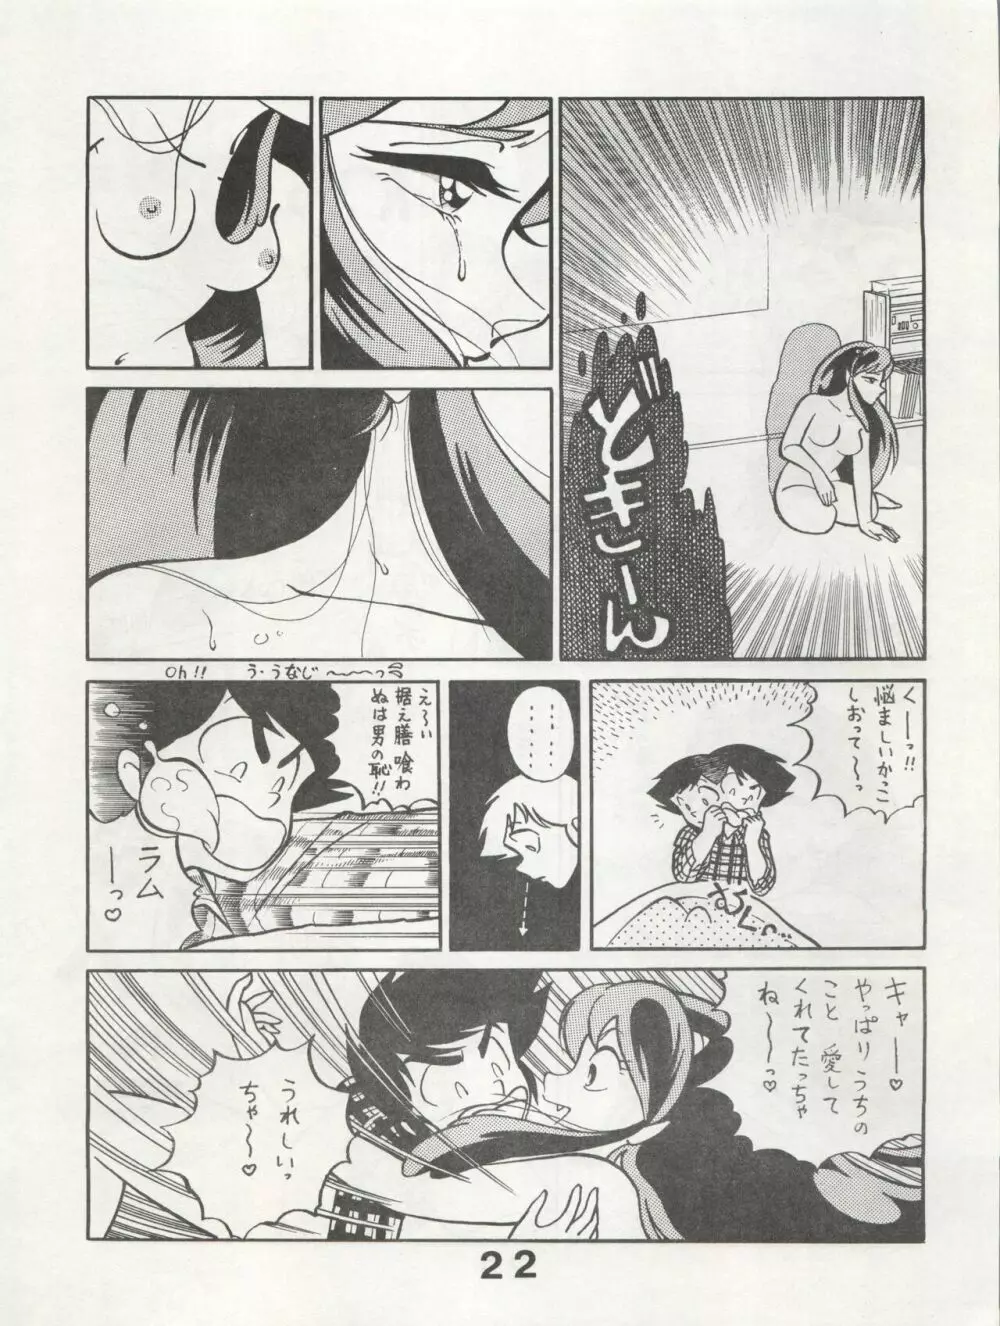 MoN MoN もんモン Vol.5 - page22